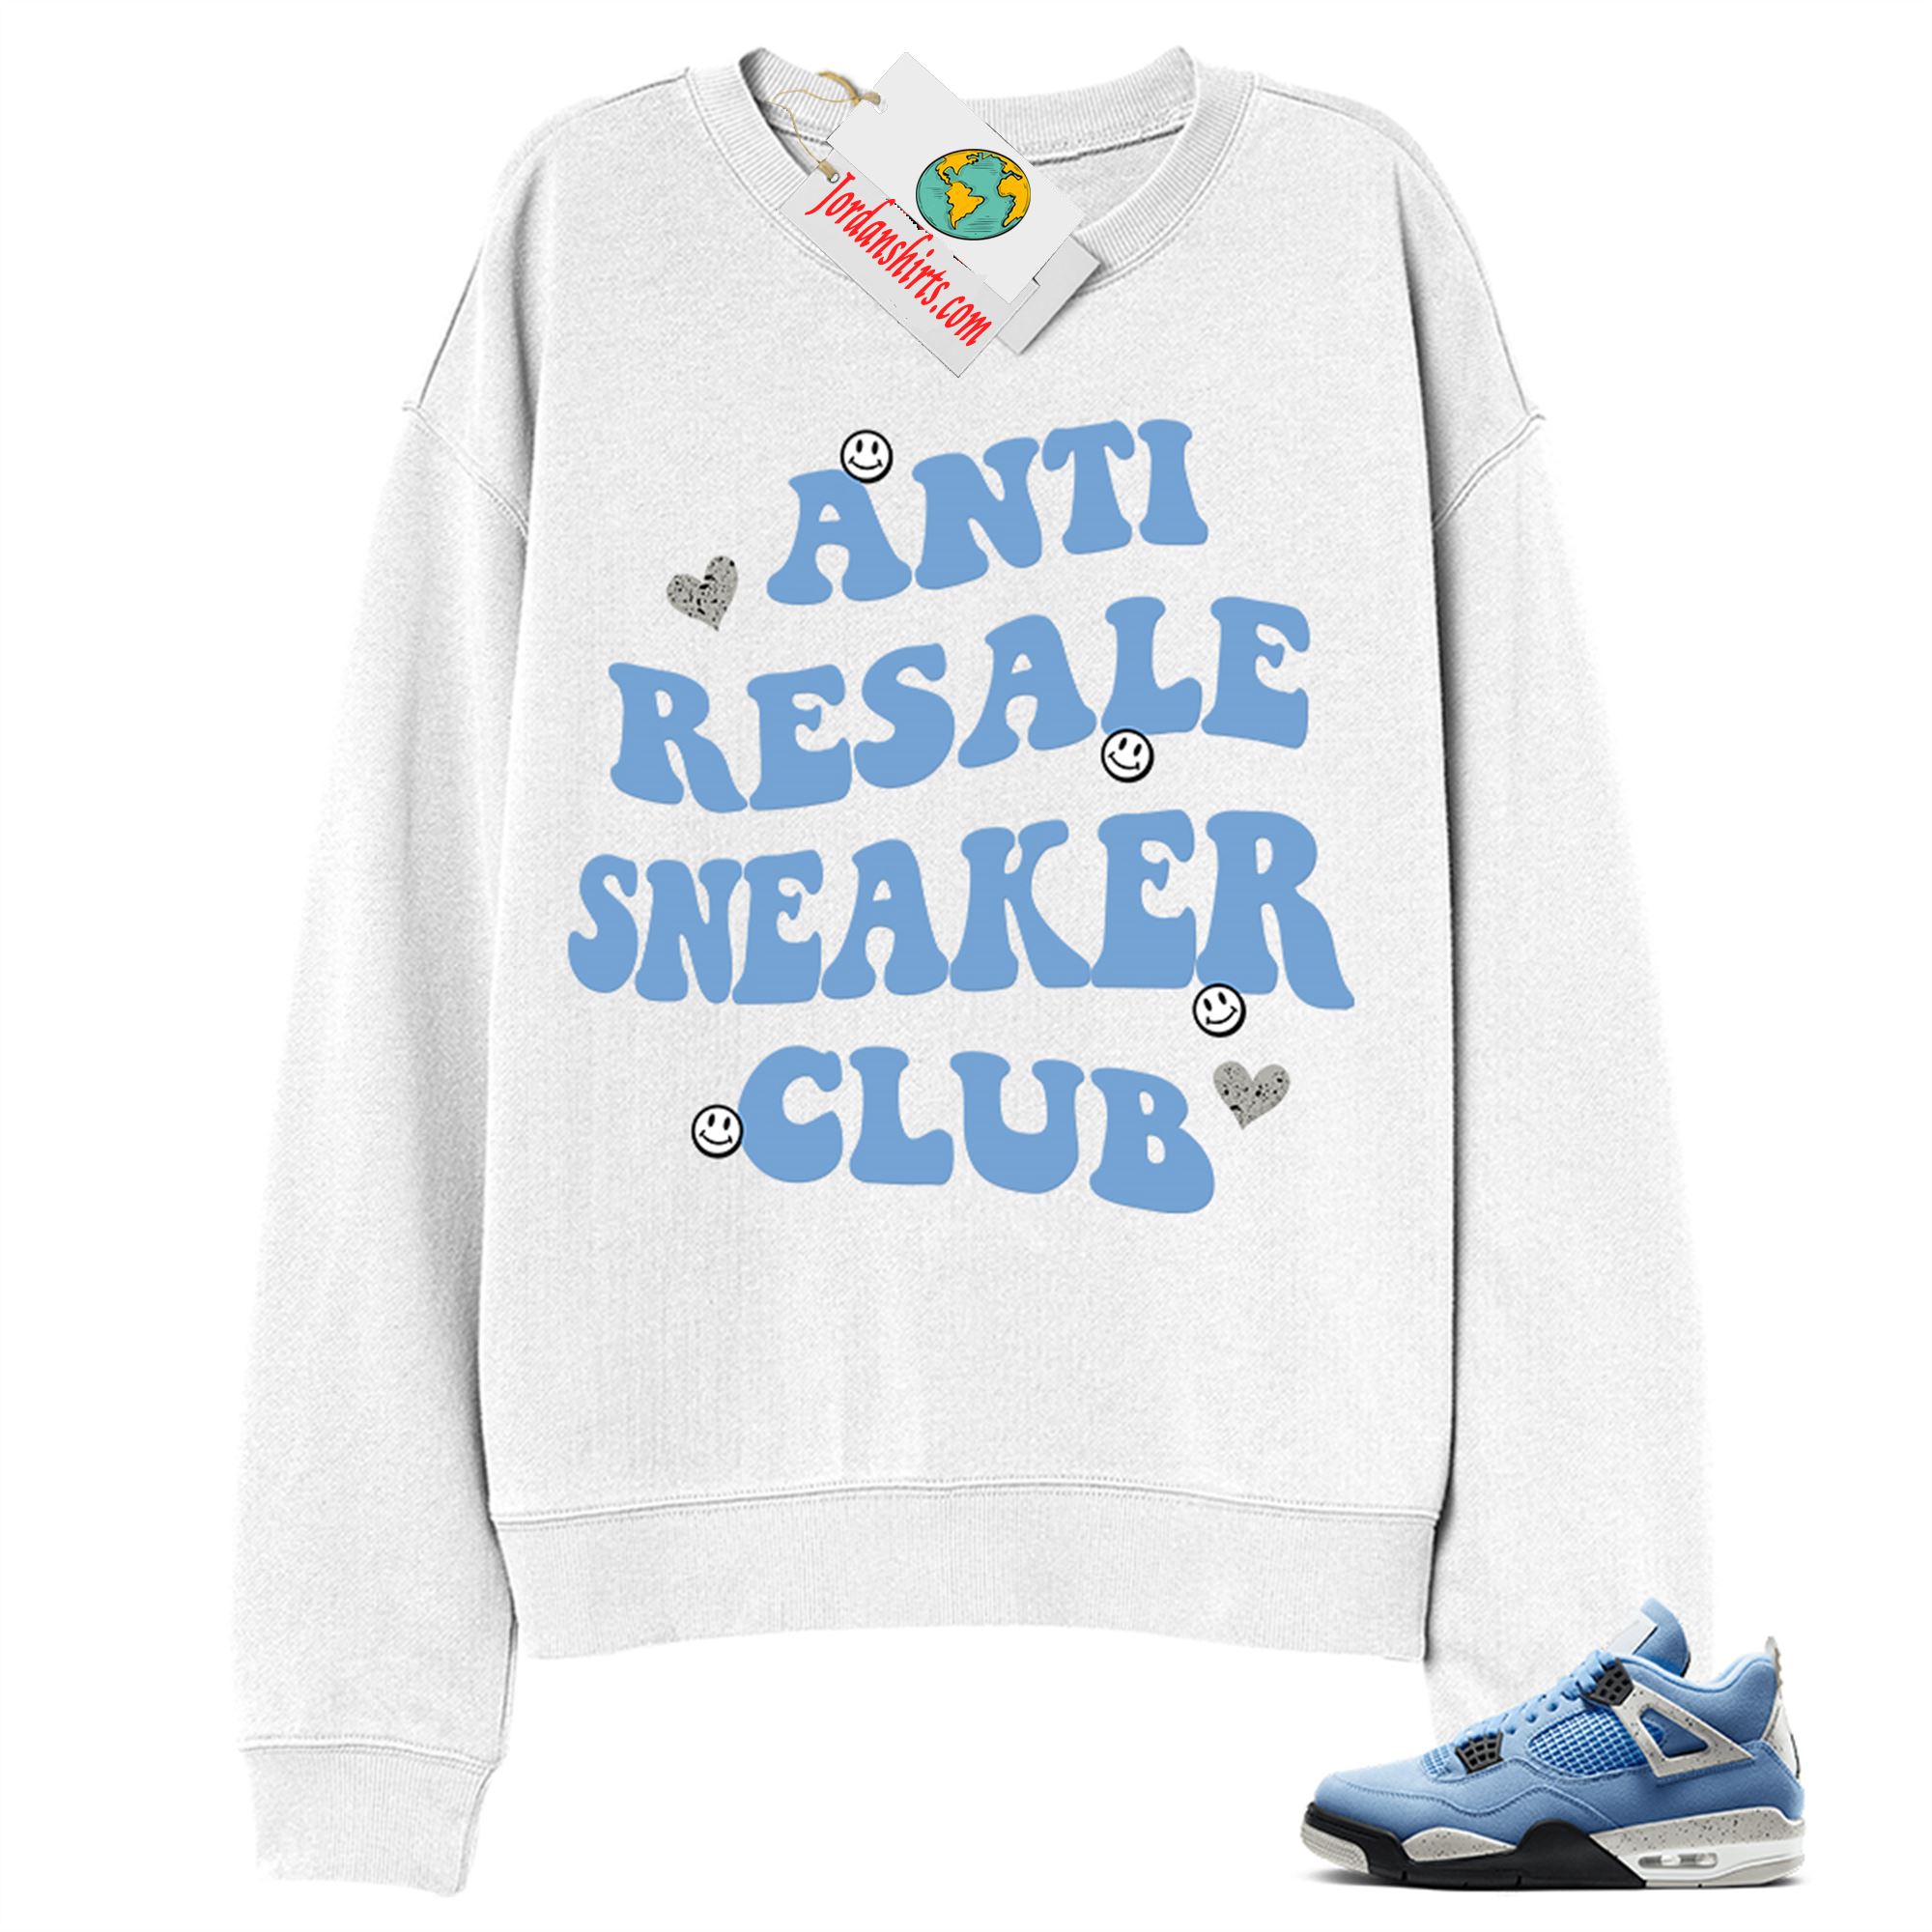 Jordan 4 Sweatshirt, Anti Resale Sneaker Club White Sweatshirt Air Jordan 4 University Blue 4s Size Up To 5xl